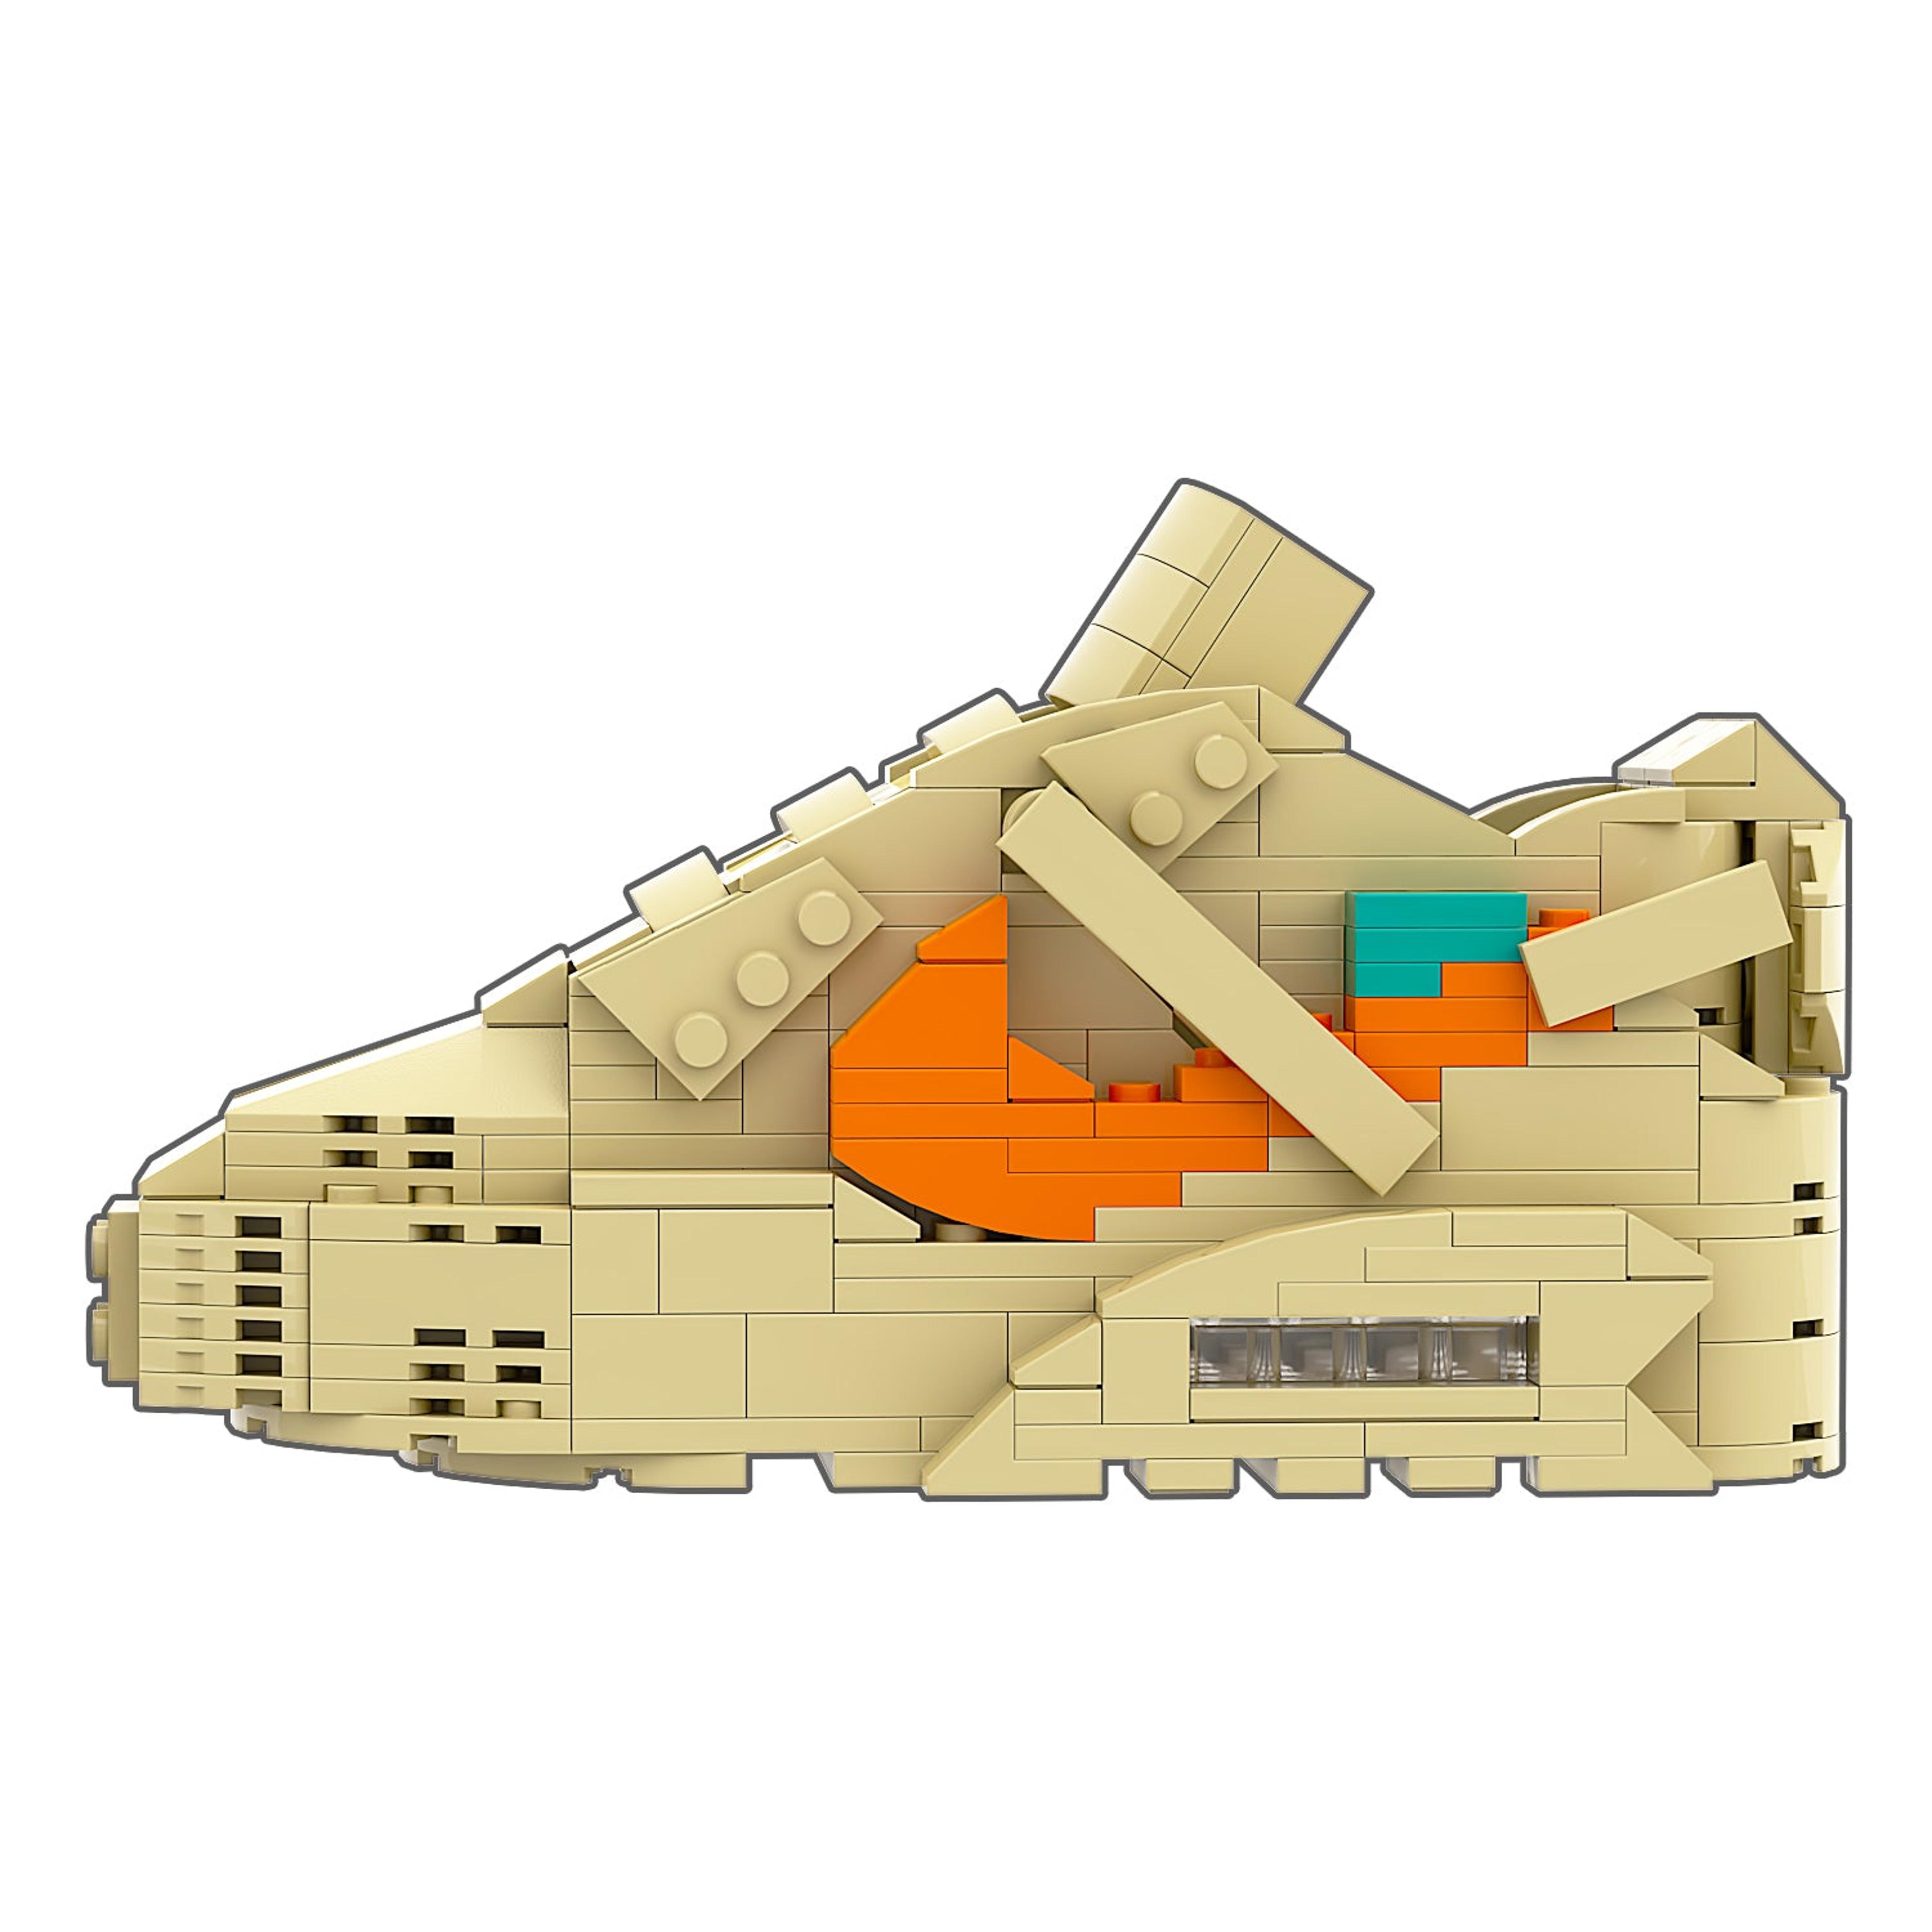 Alternate View 1 of REGULAR Air Max 90 "Desert Ore" Sneaker Bricks with Mini Figure